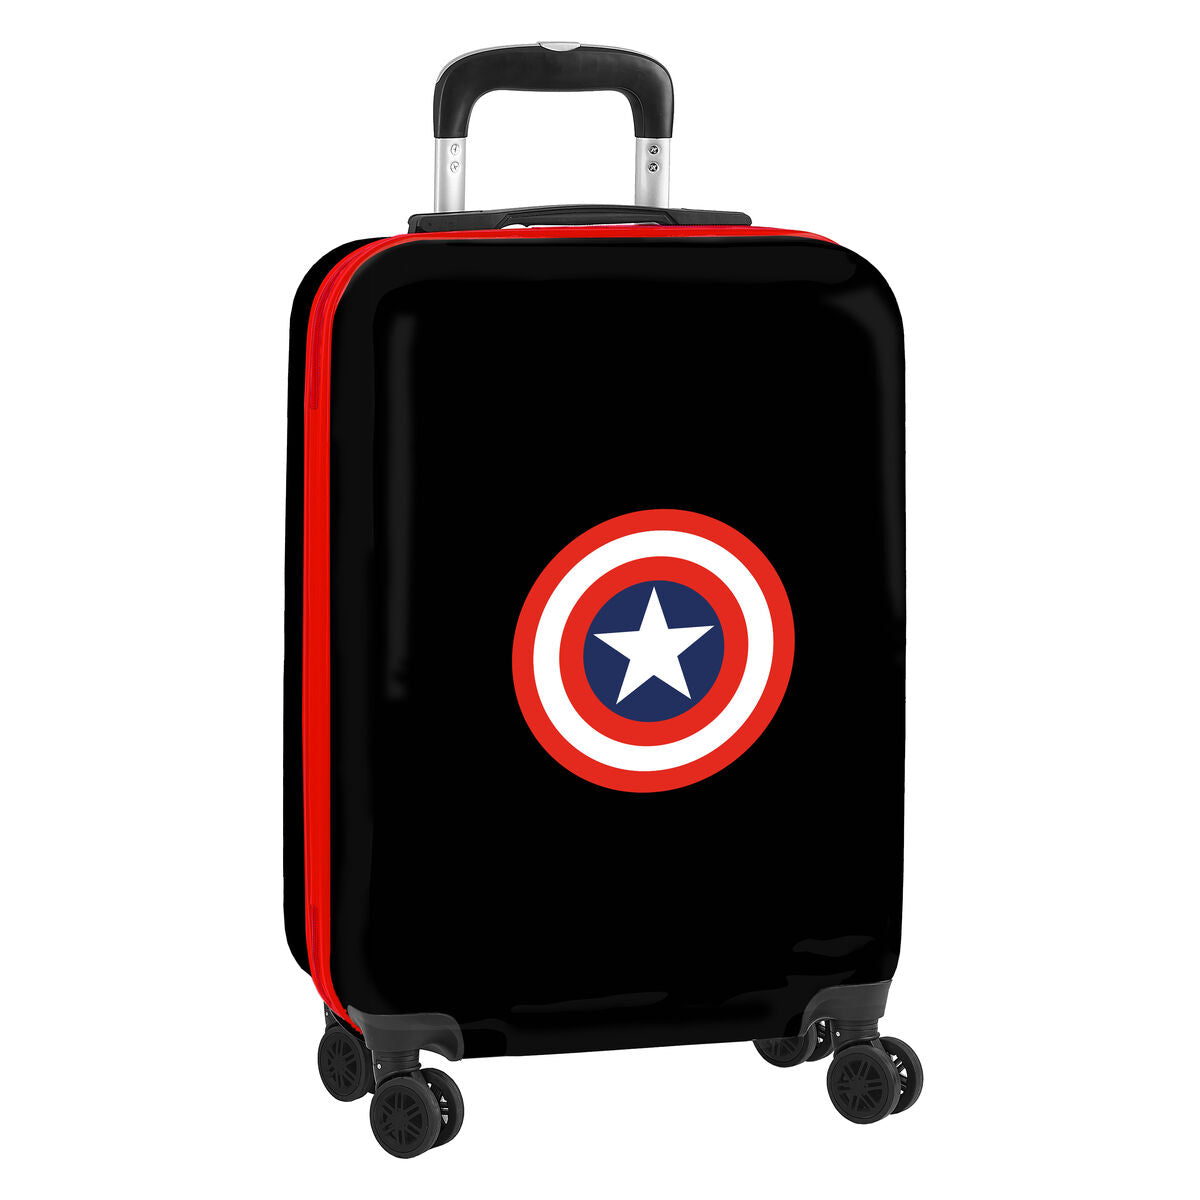 Cabin suitcase Capitán América Black 34,5 x 55 x 20 cm